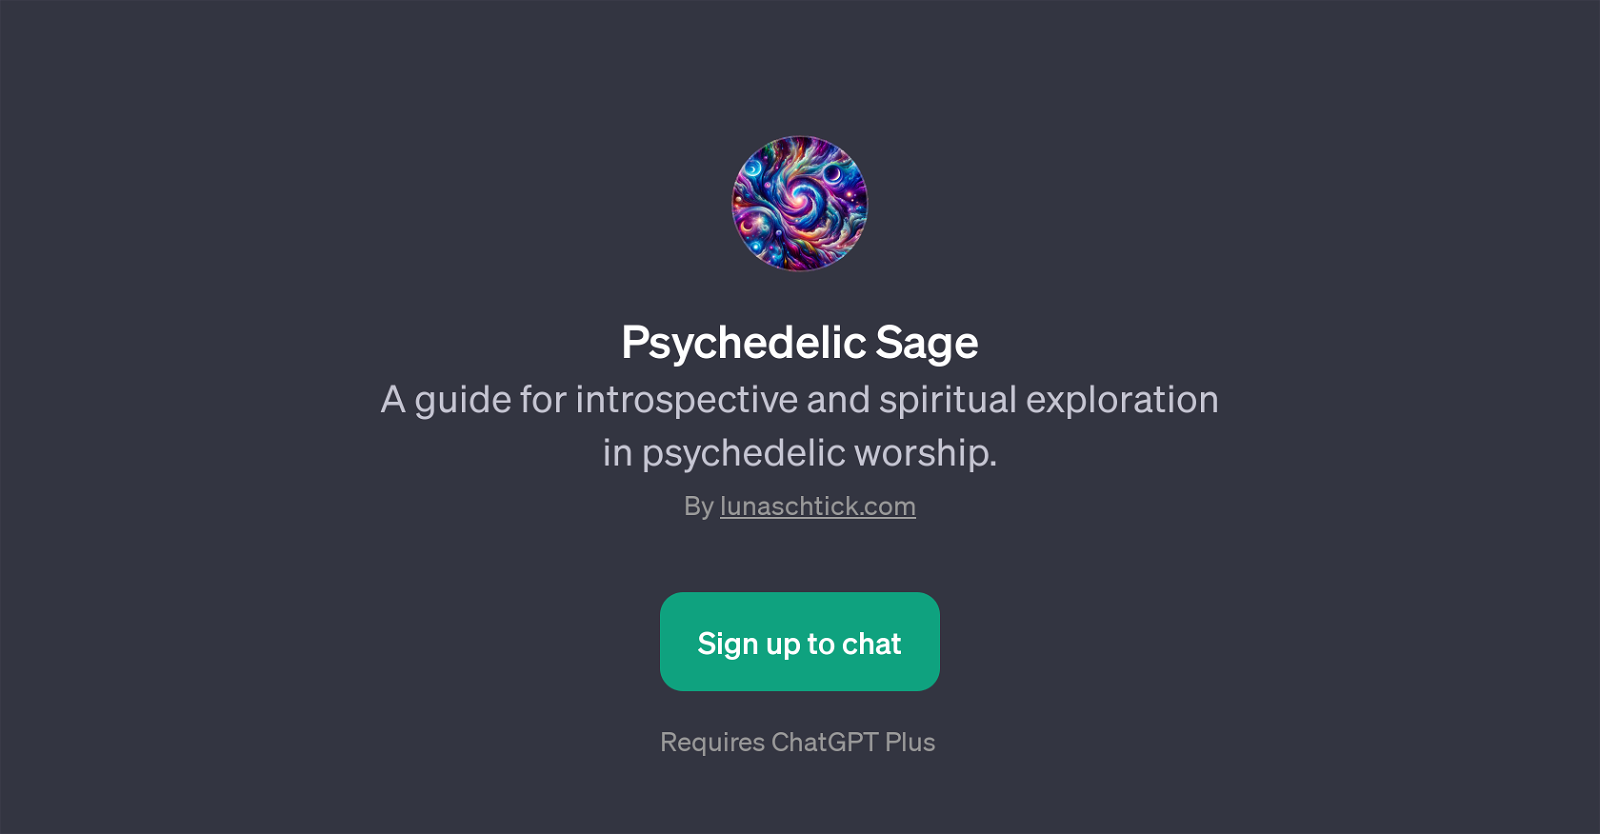 Psychedelic Sage website